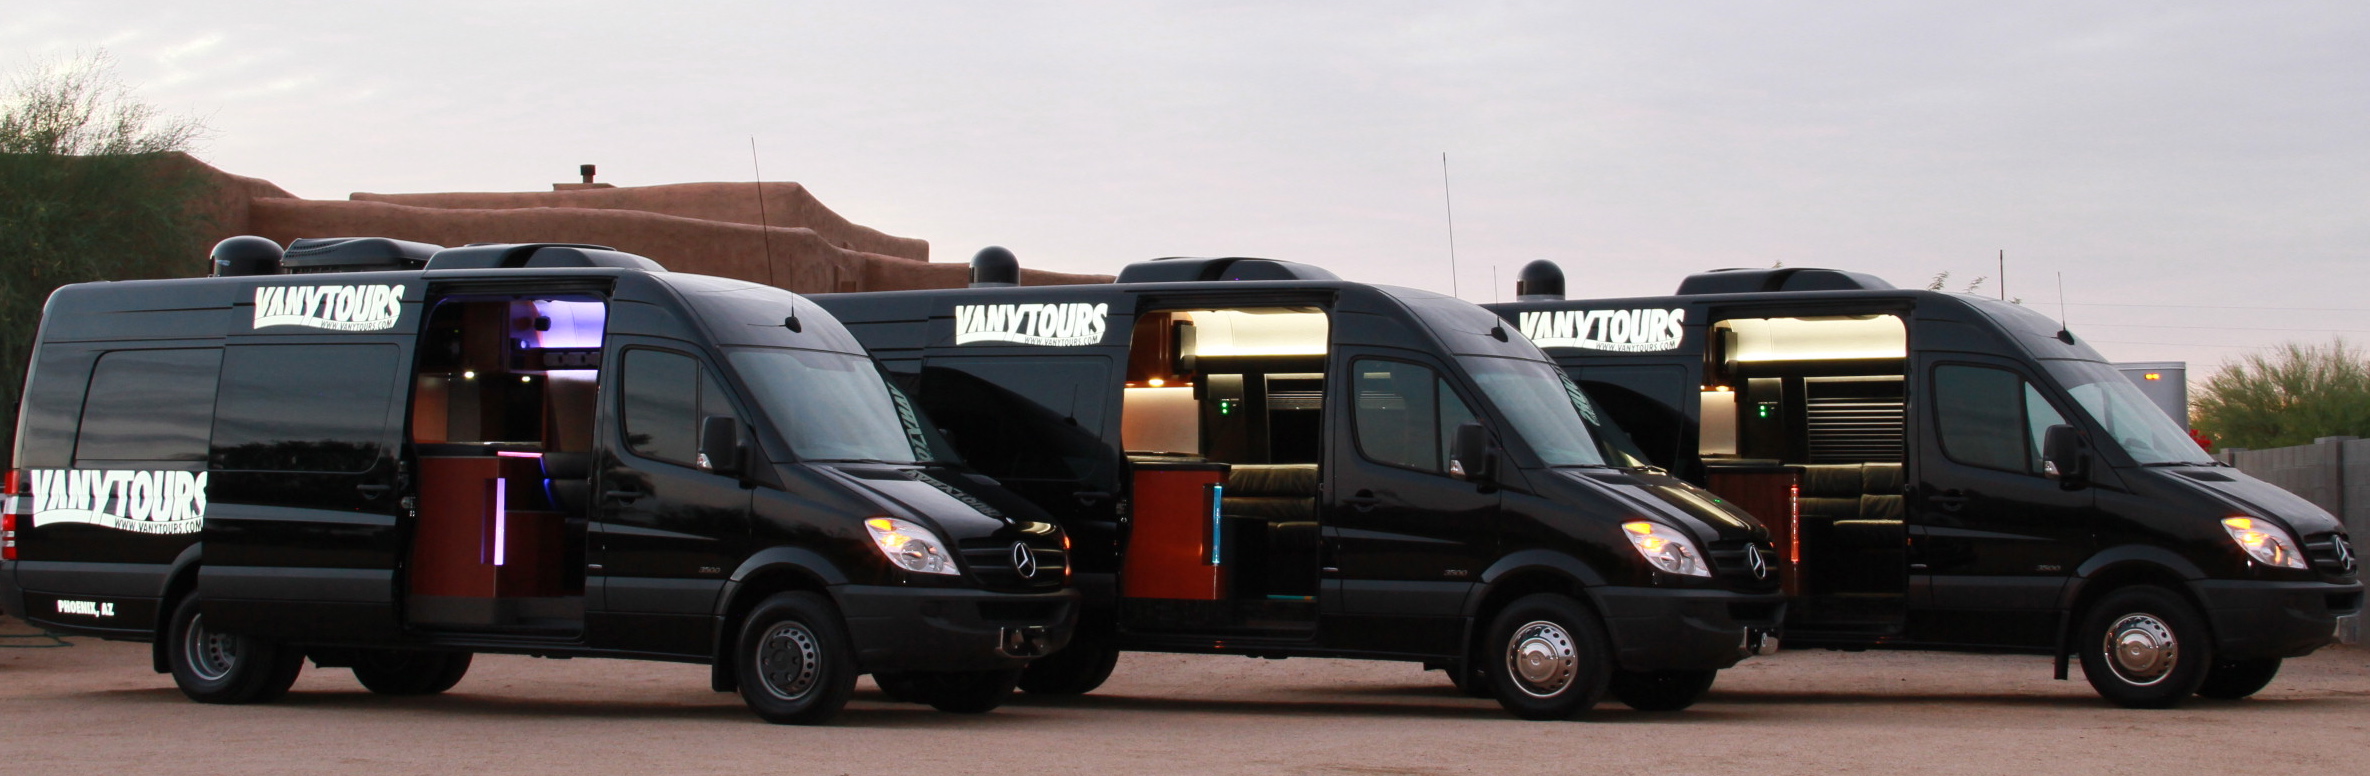 Van Y Tours luxury vans!